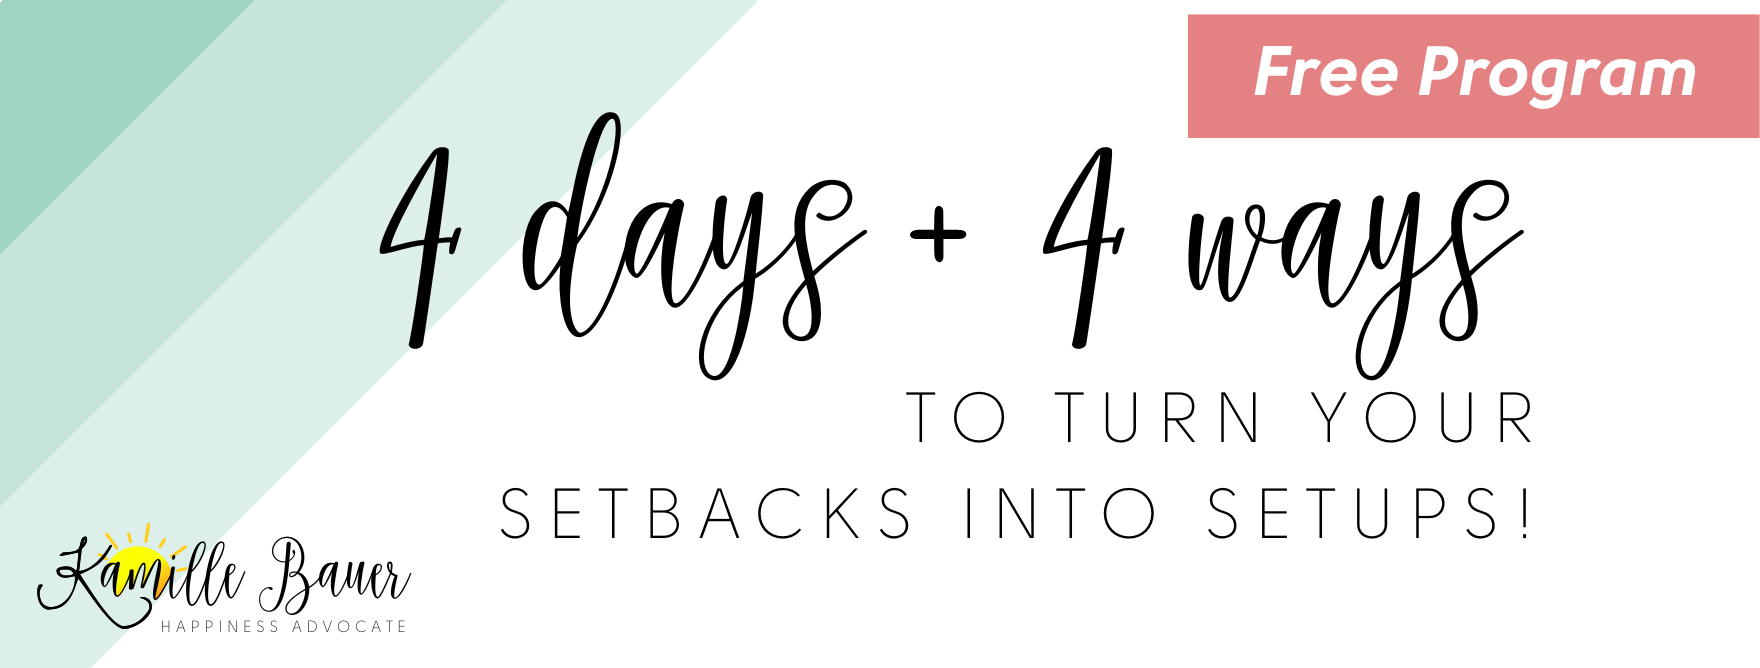 4 days + 4 ways to turn your setbacks into setups